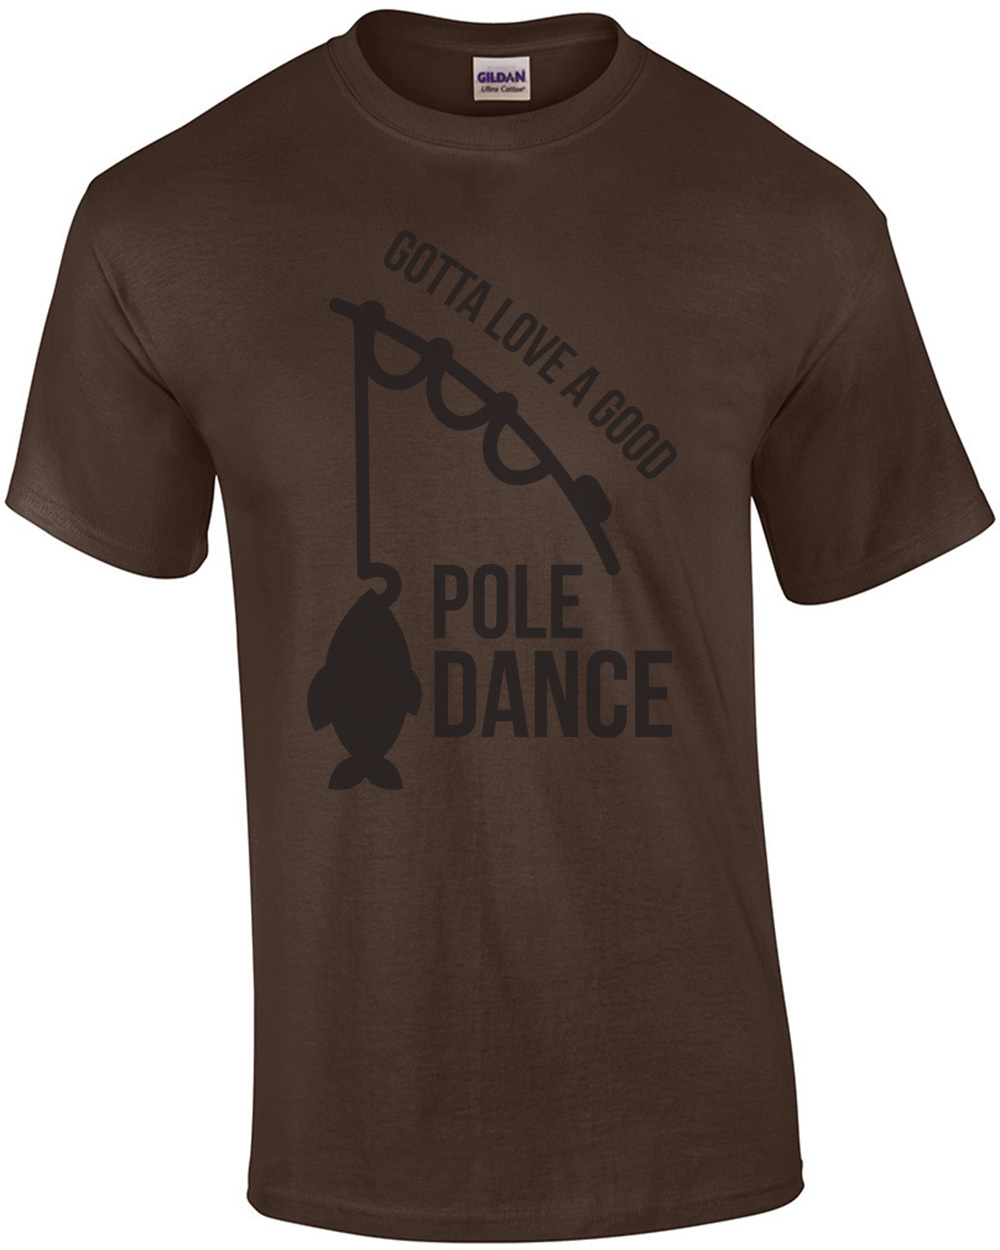 Gotta Love a Good Pole Dance, Funny Fishing Shirts For Men T-Shirt